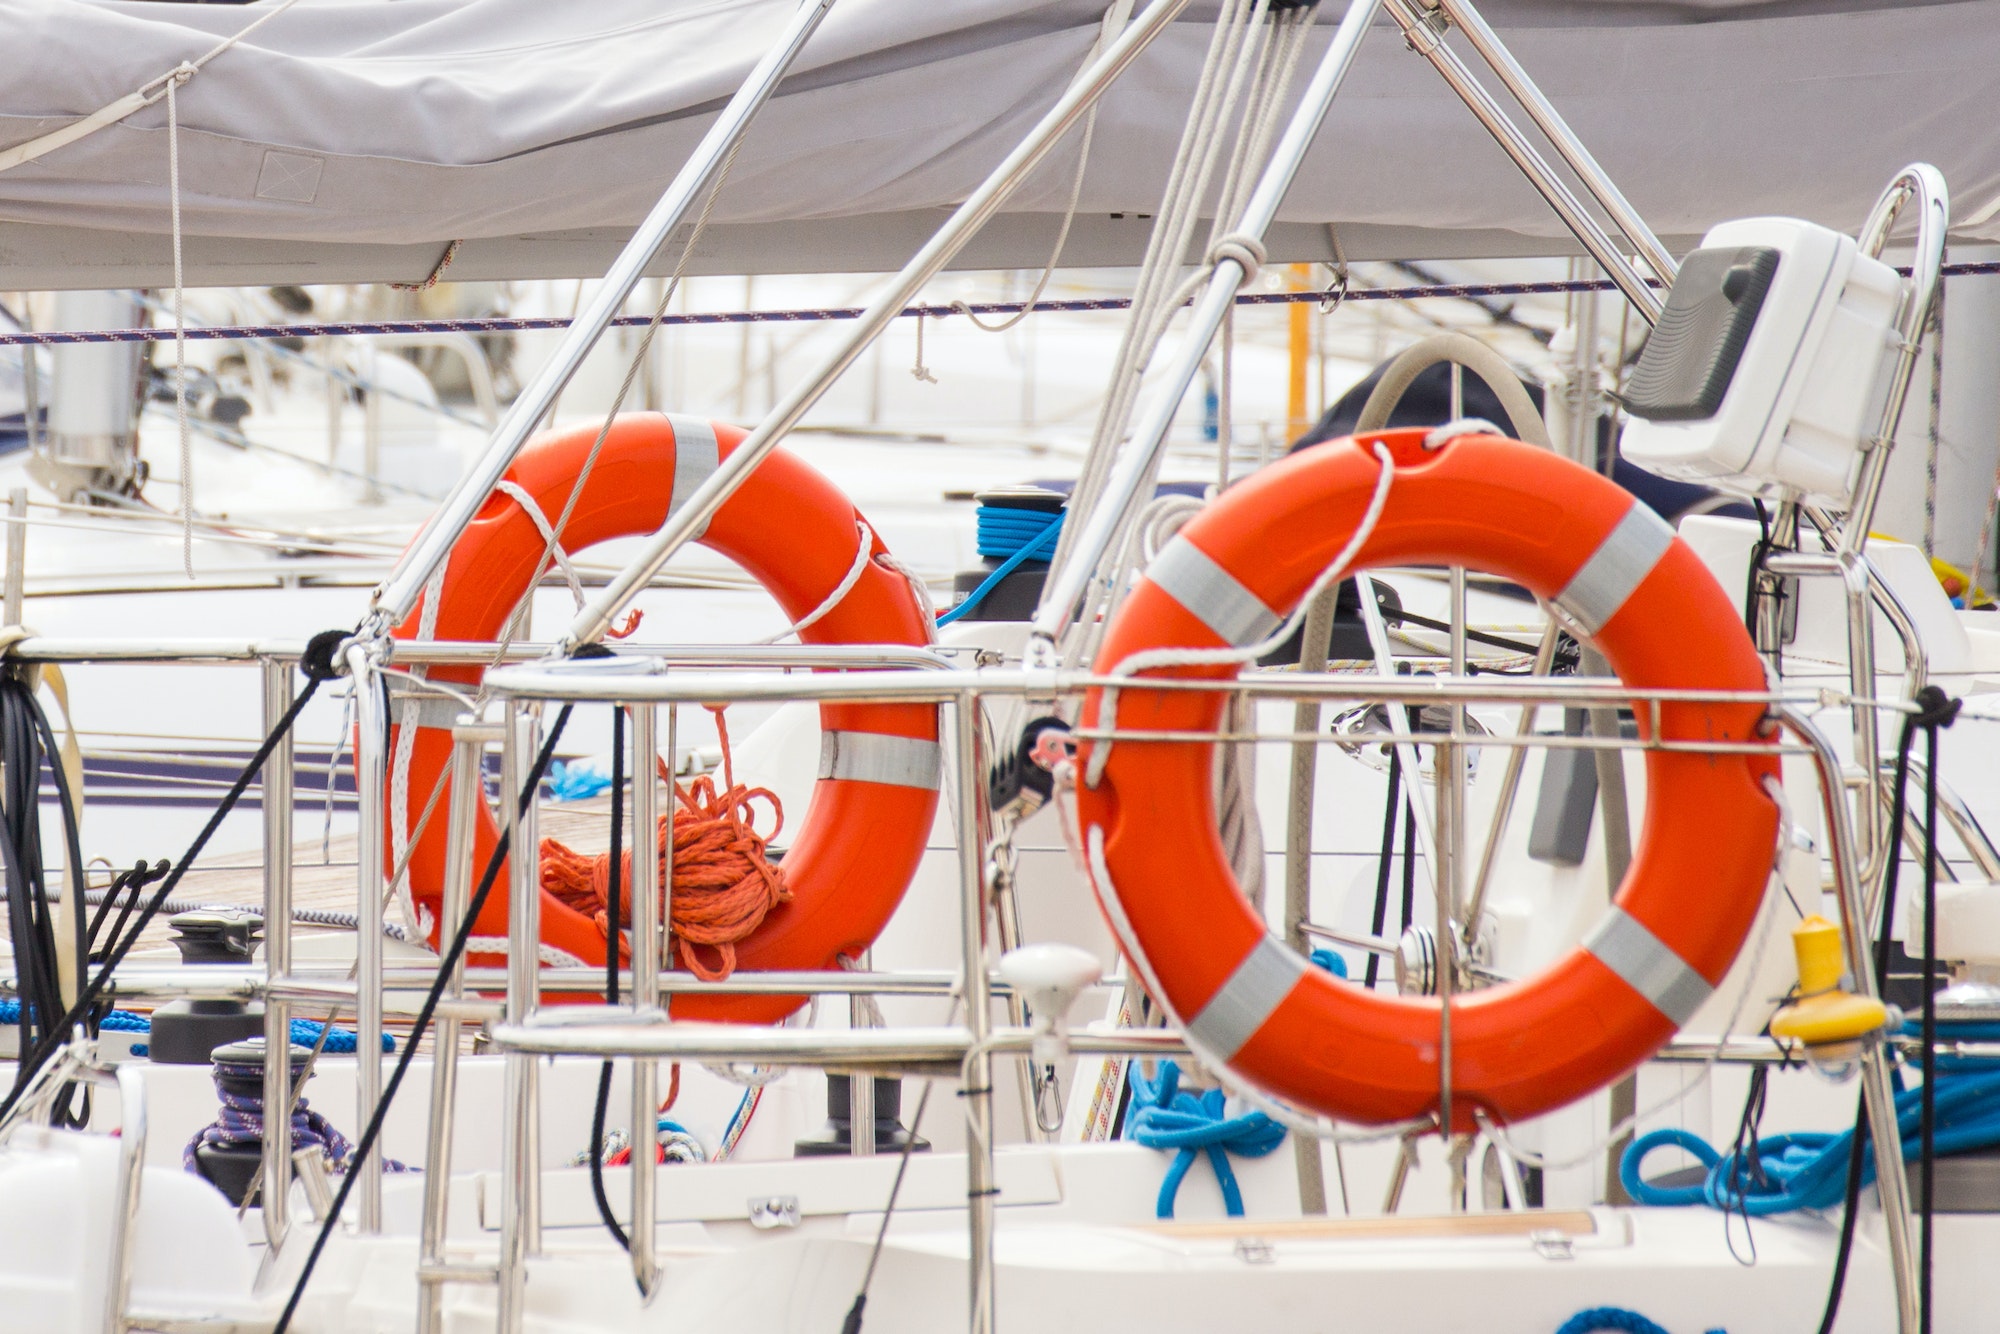 Parts of yacht, Orange lifebuoy on sailboat, safety travel concept